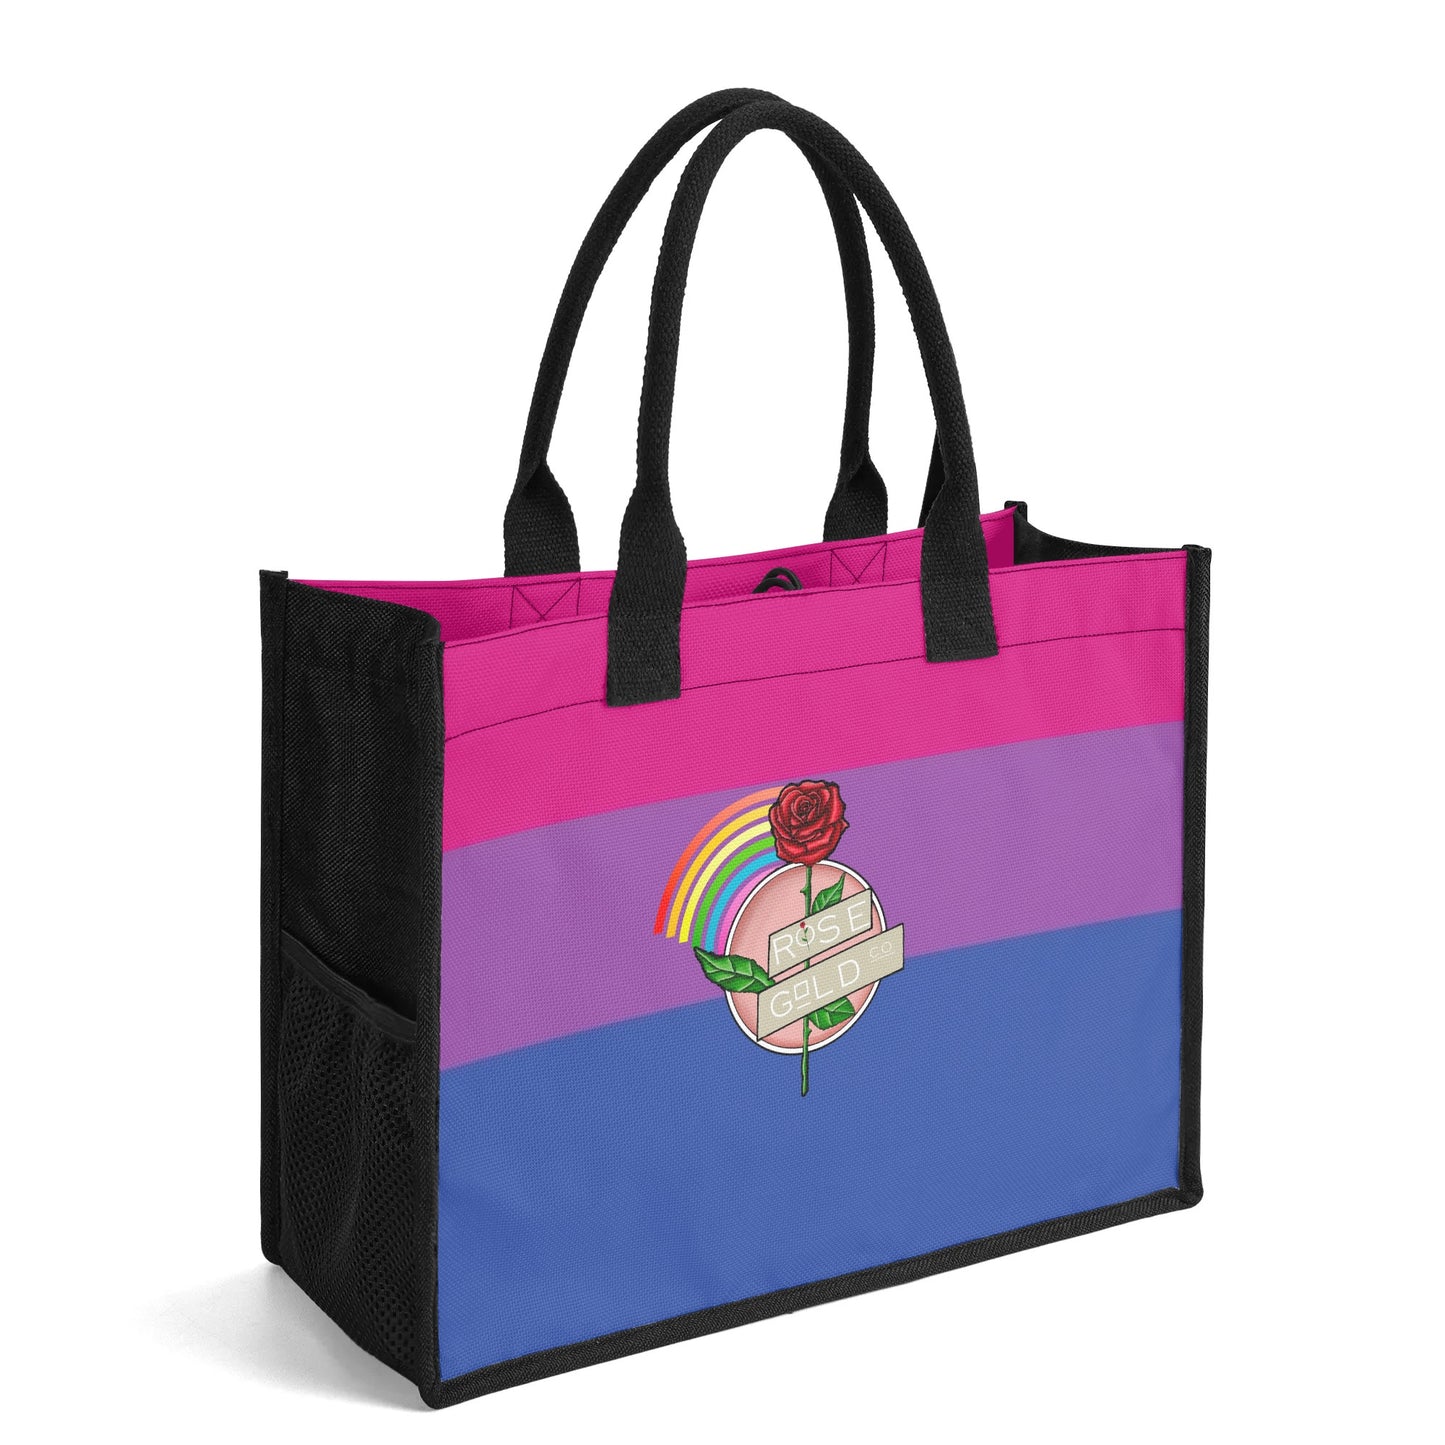 Bisexual Pride Tote Bag - Rose Gold Co. Shop